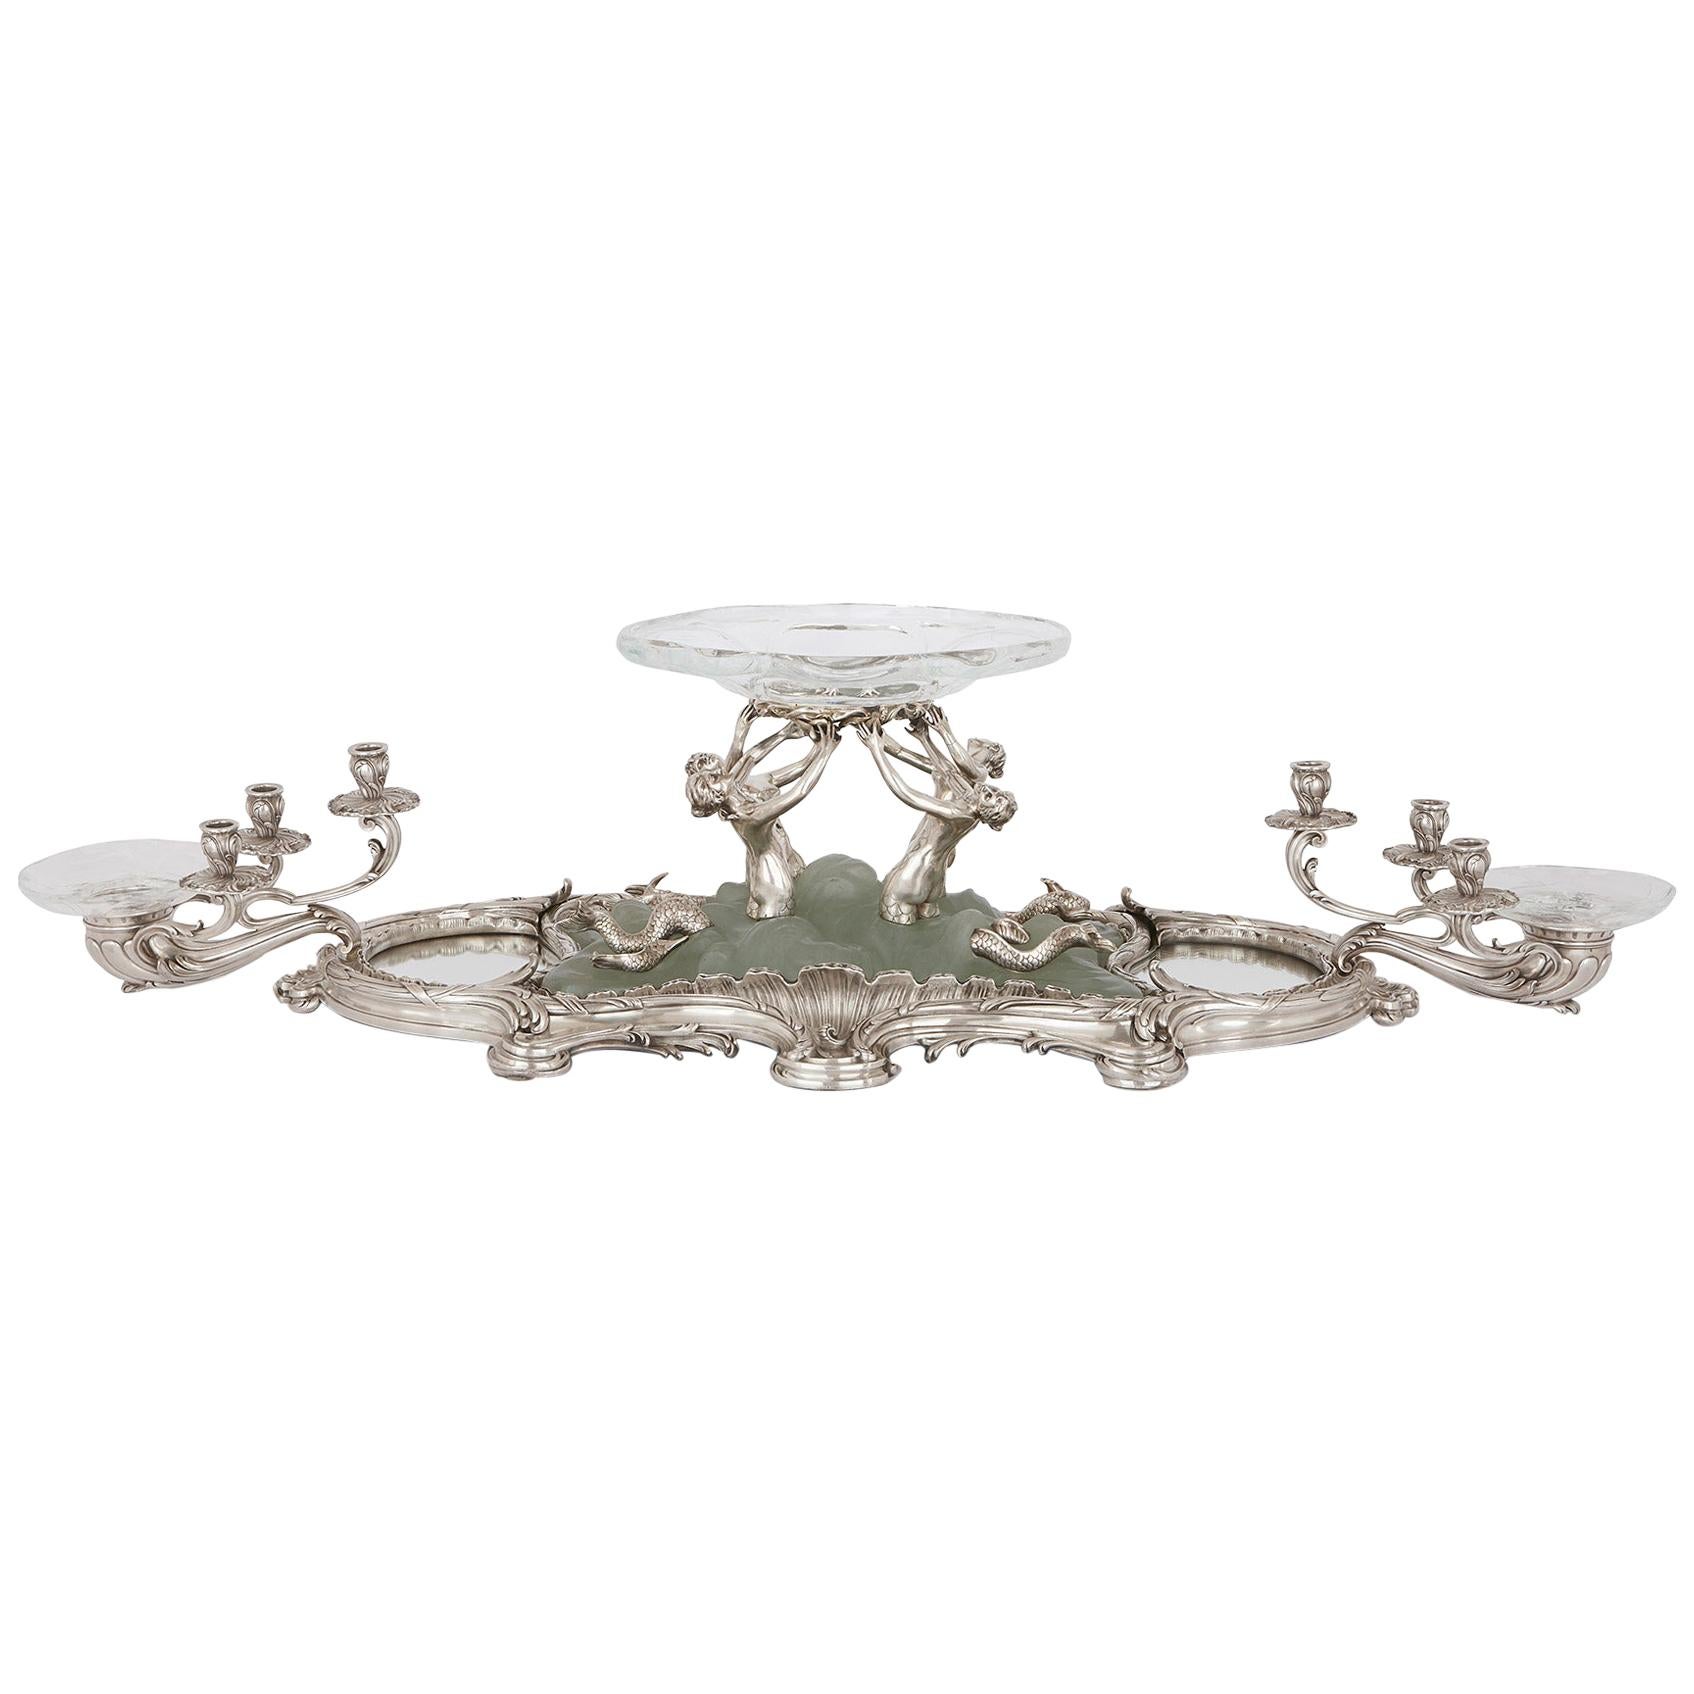 Art Nouveau Silver, Crystal, and Pate De Verre Table Centrepiece by Falize For Sale